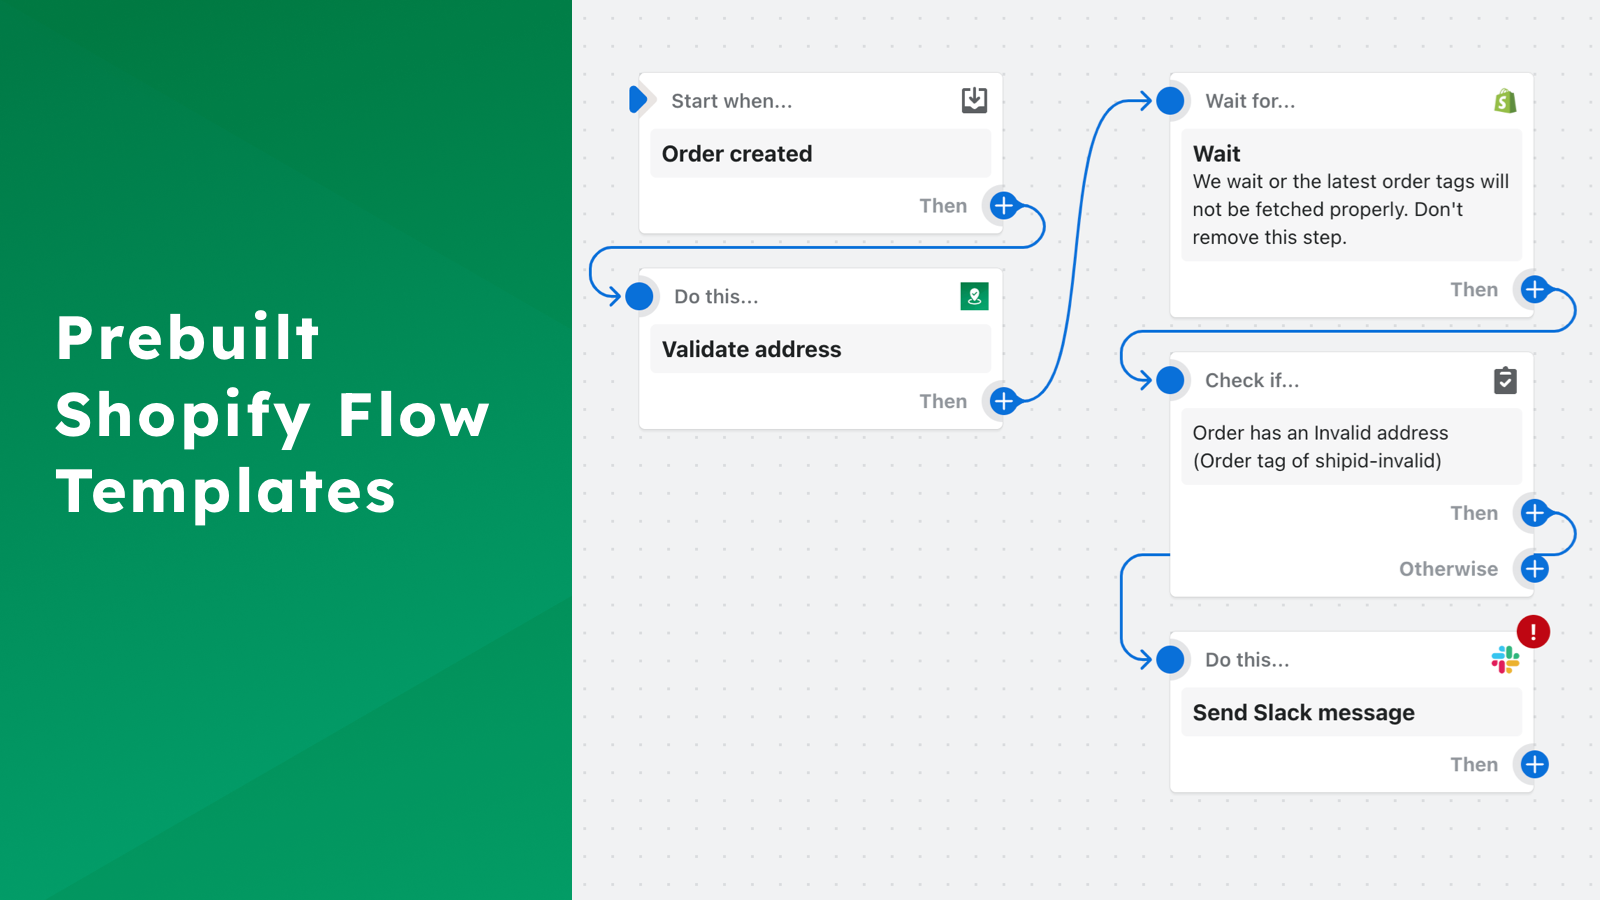 Prebuilt Shopify Flow template